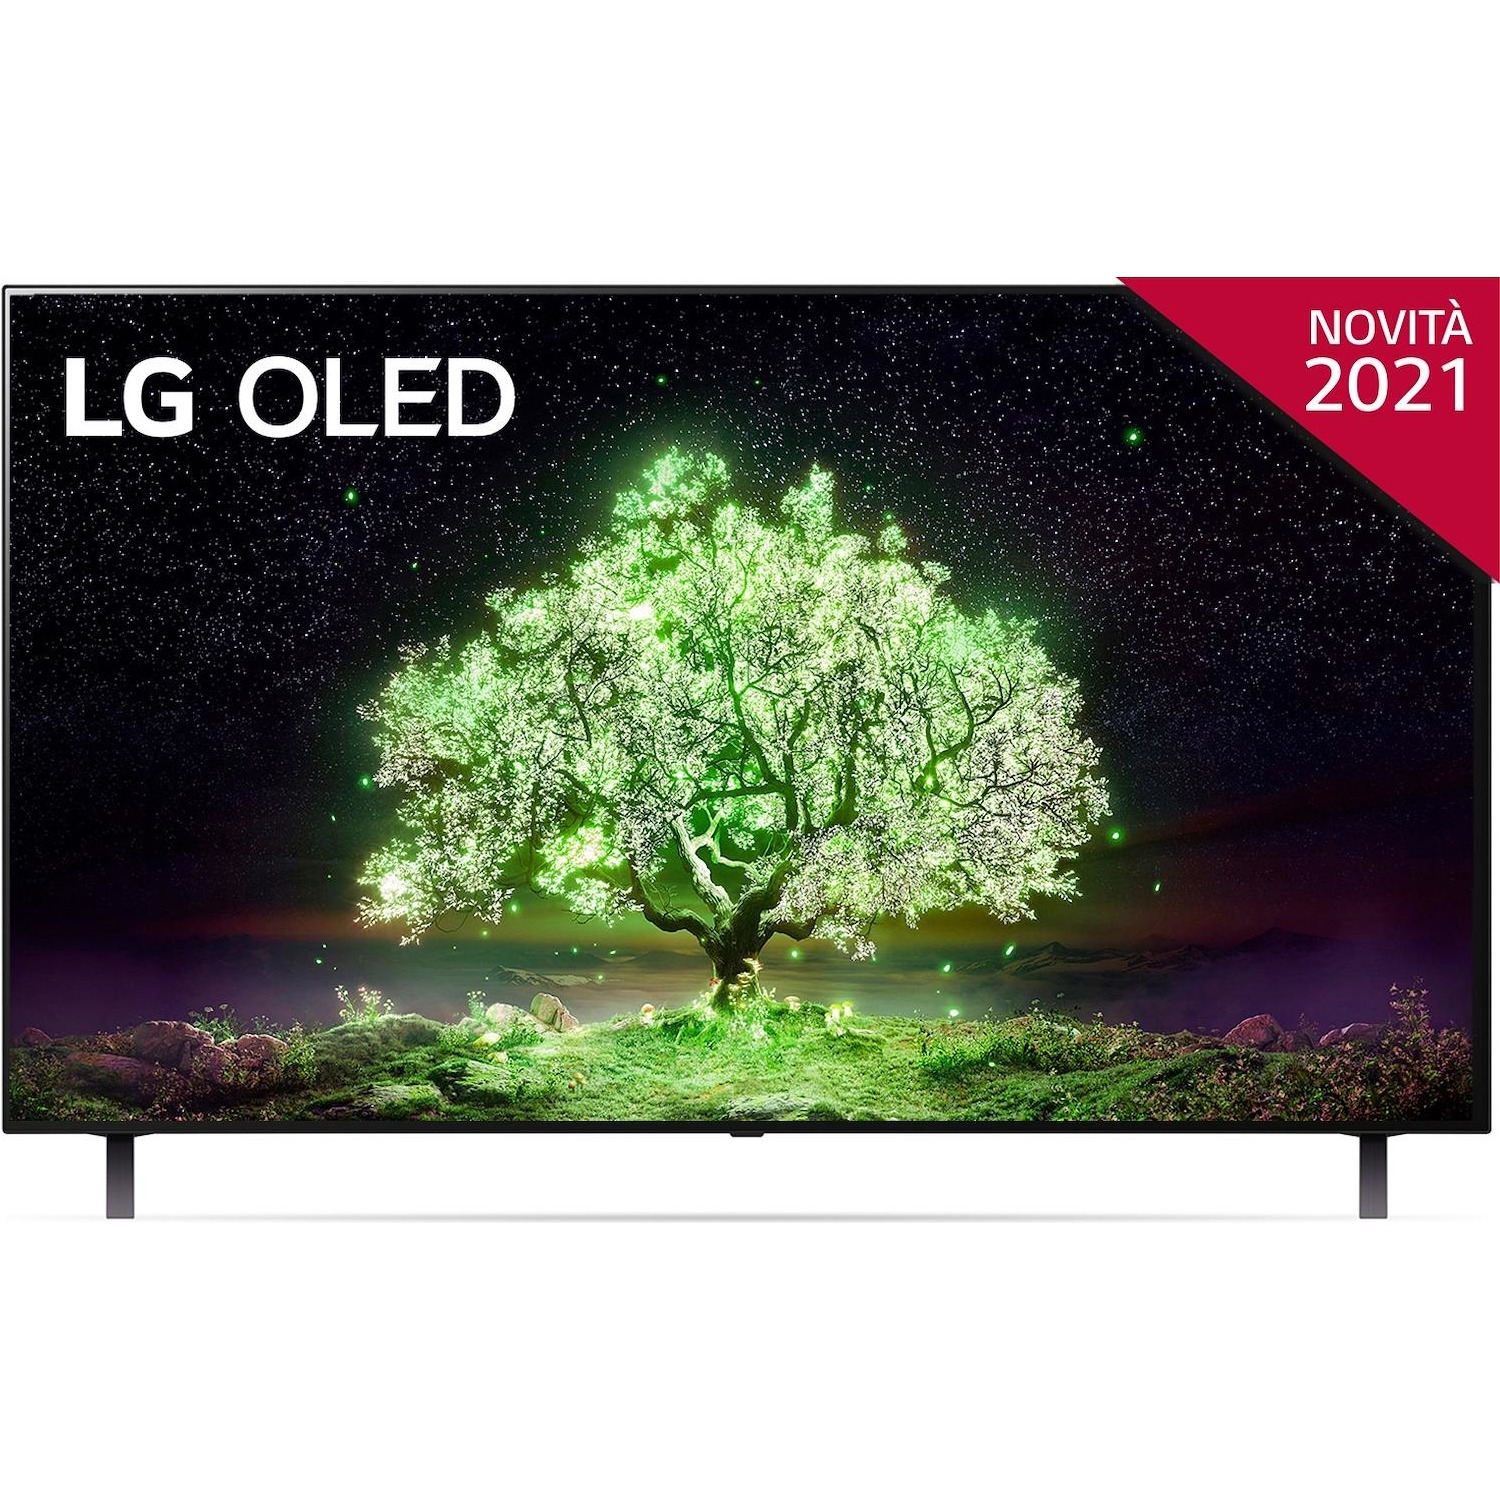 Immagine per TV OLED LG OLED55A16 Calibrato 4K e FULL HD da DIMOStore